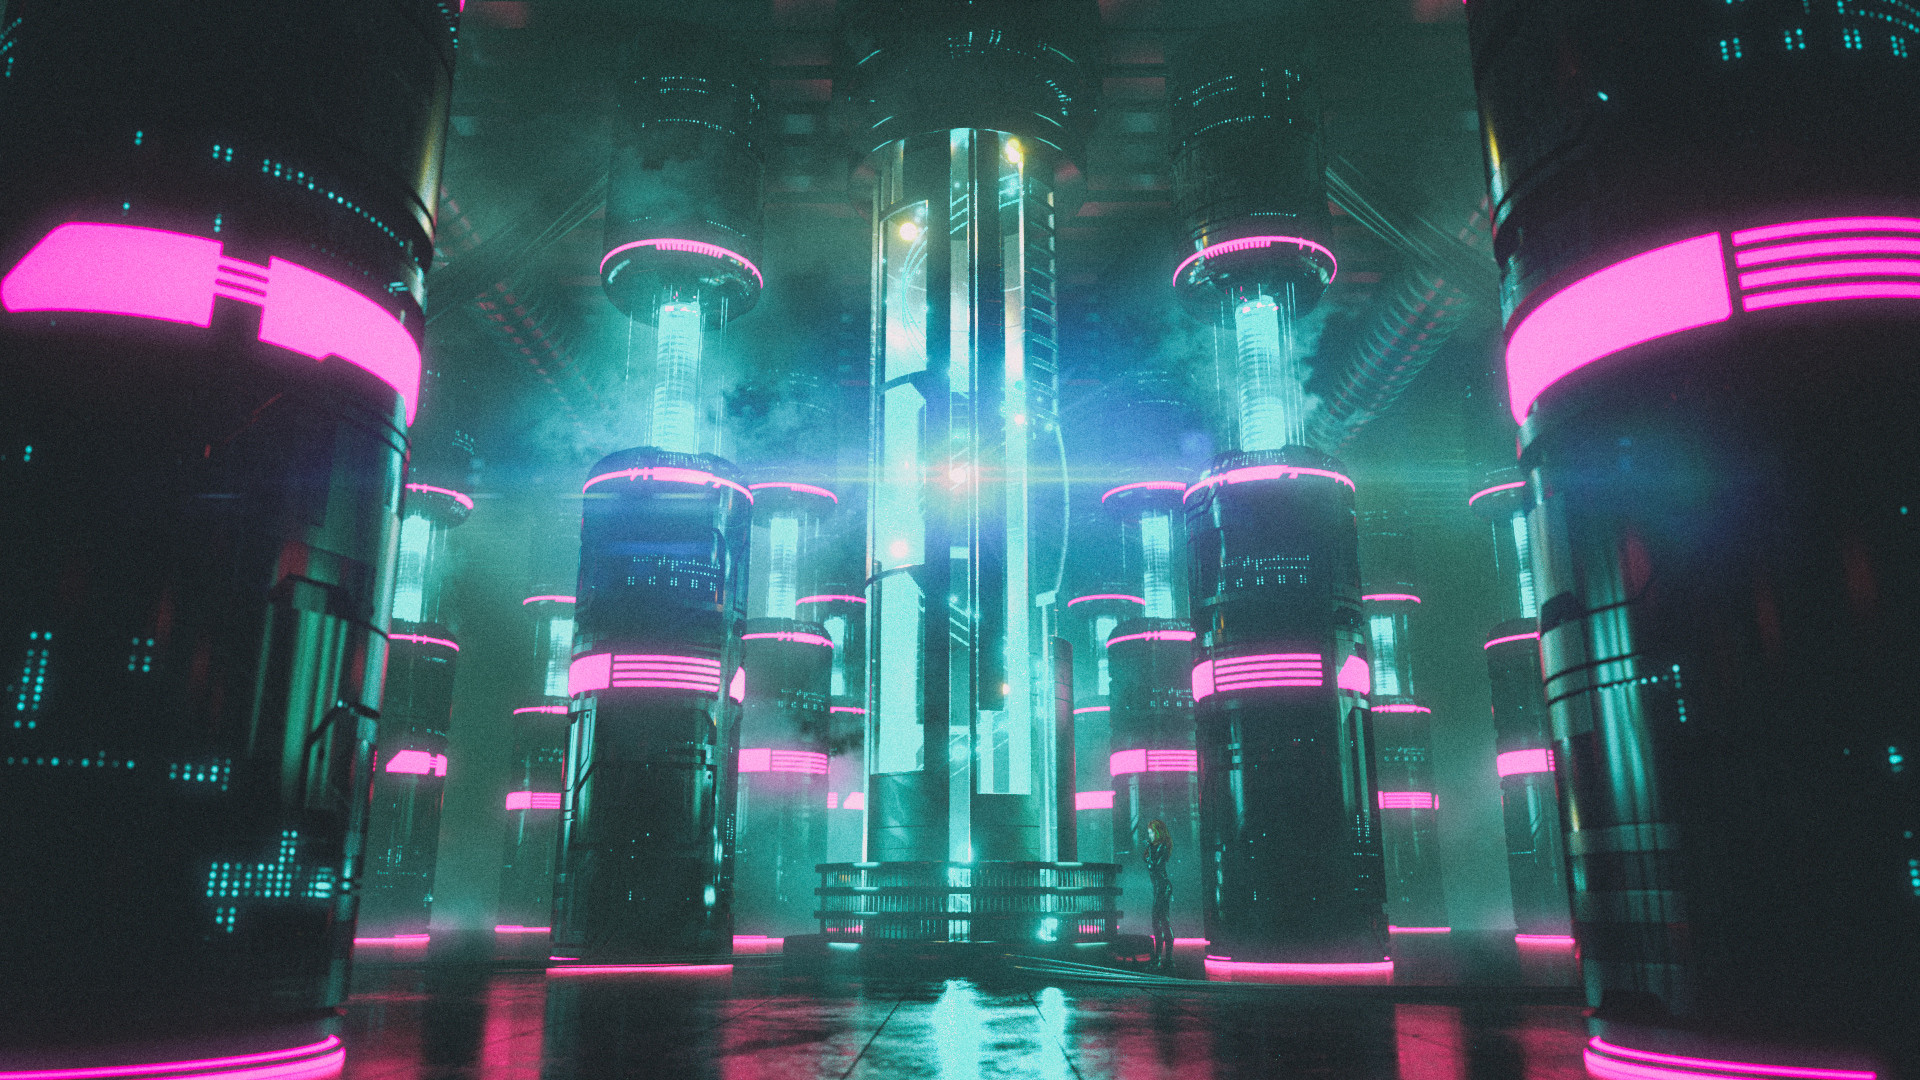 David Legnon Cyberpunk Engine Room Pillar Neon Glow Pink Blue Smoke Science Fiction 1920x1080